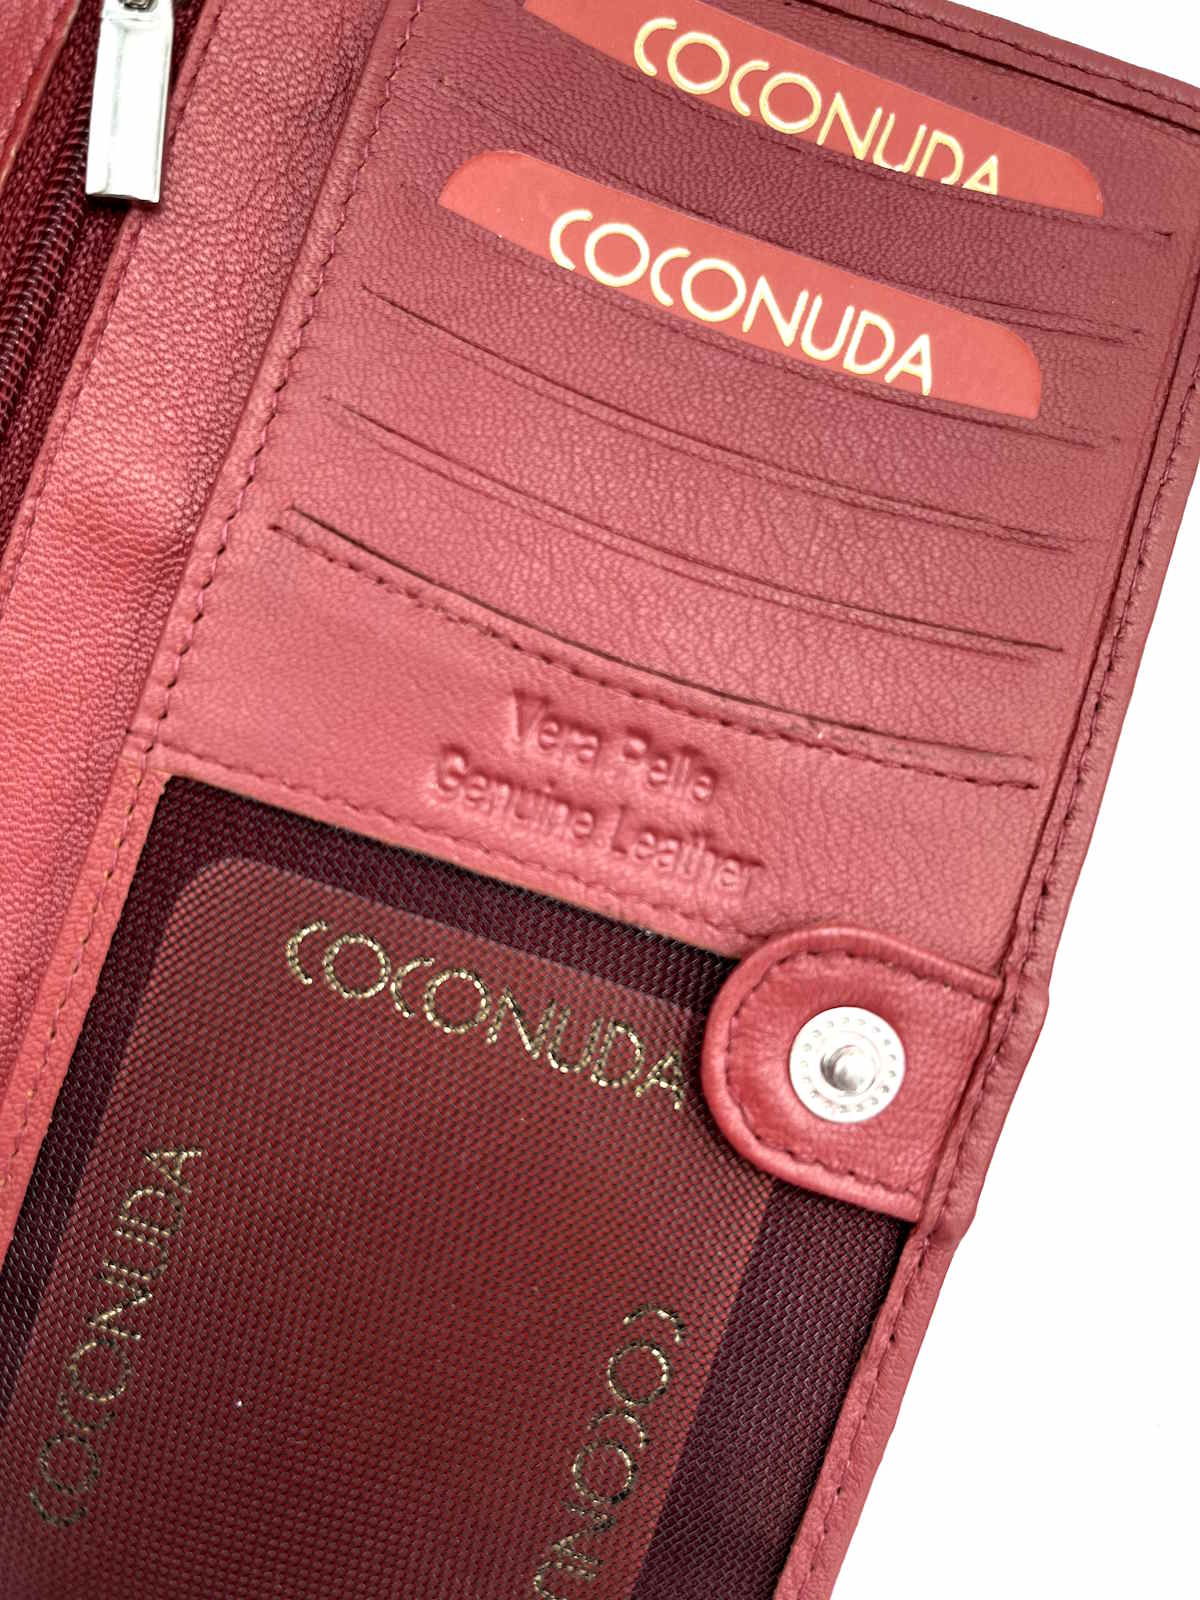 Genuine leather wallet, Coconuda for women, art. PDK321-57